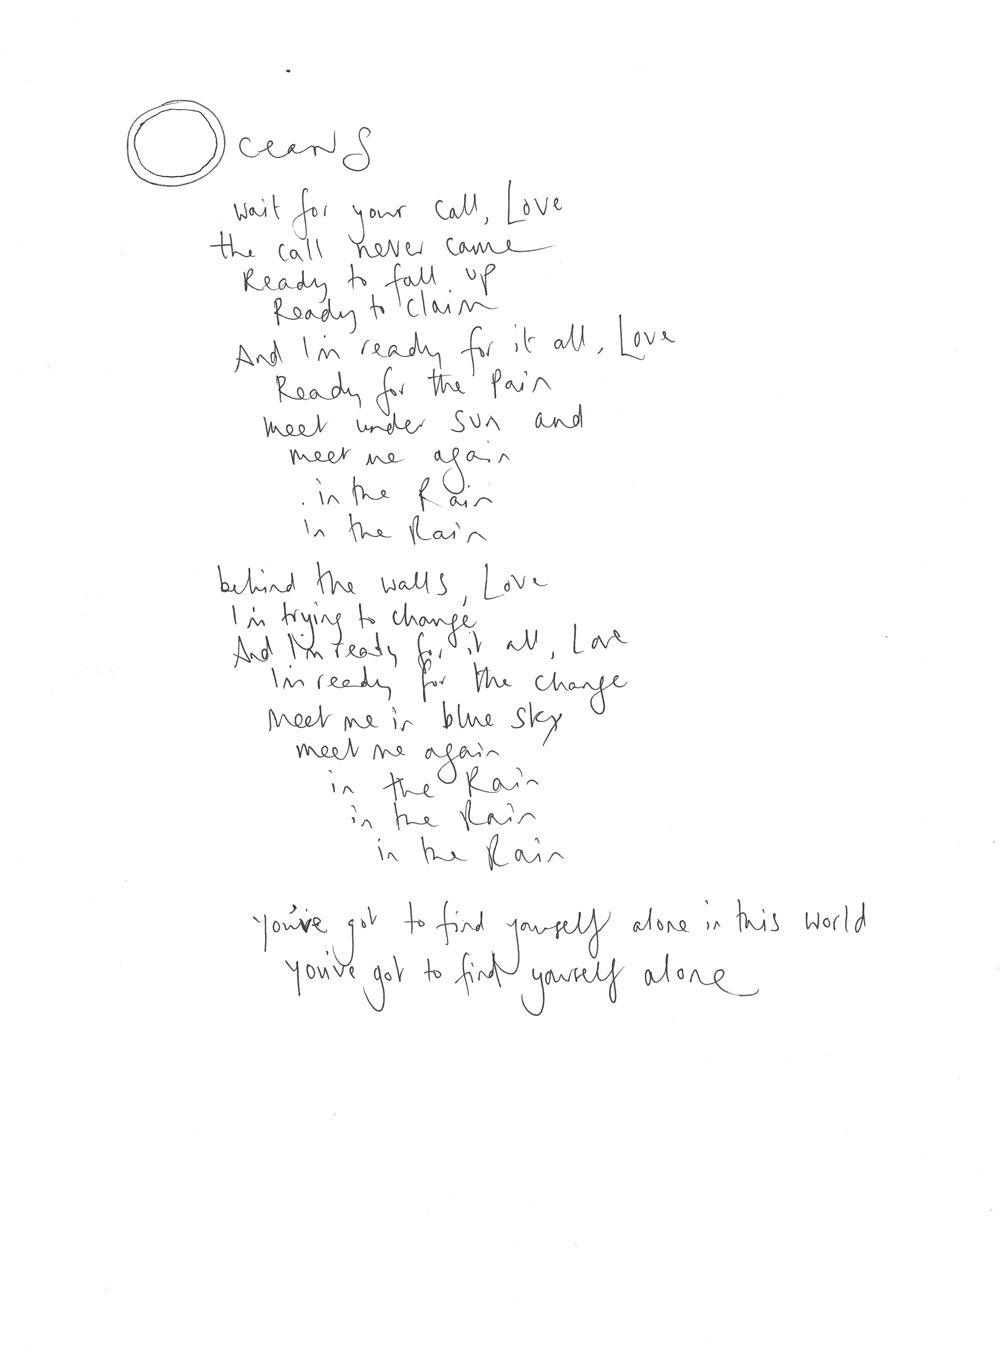 Coldplay - True Love (Lyrics)  True love lyrics, True love, Coldplay